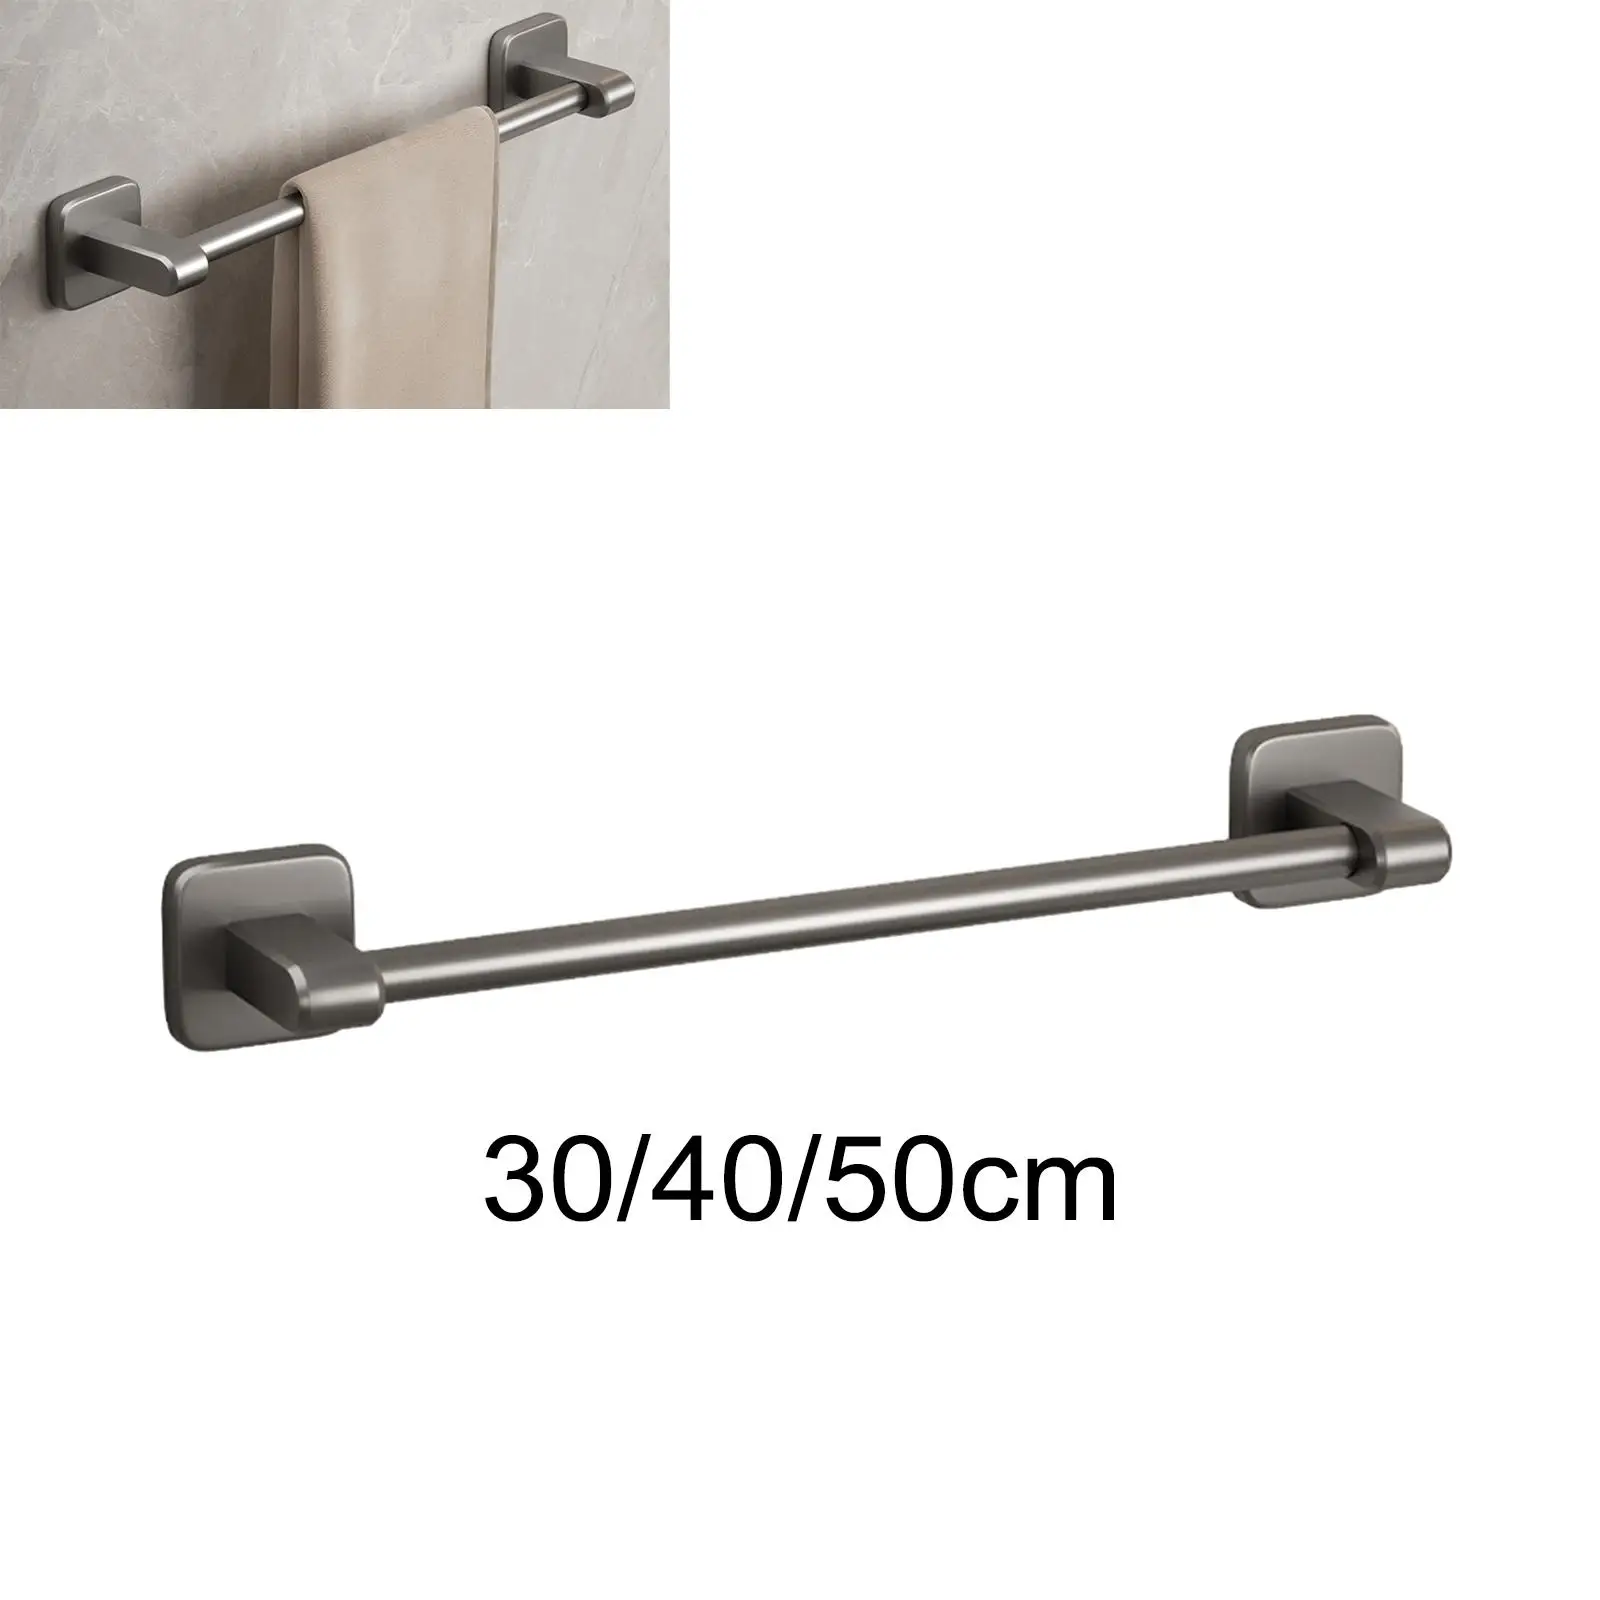 Towel Rack Holder Towel Bar for Bathroom Multi Function Space Saving Wall Mounted Towel Hanging Rod Towel Shelf for Bathroom